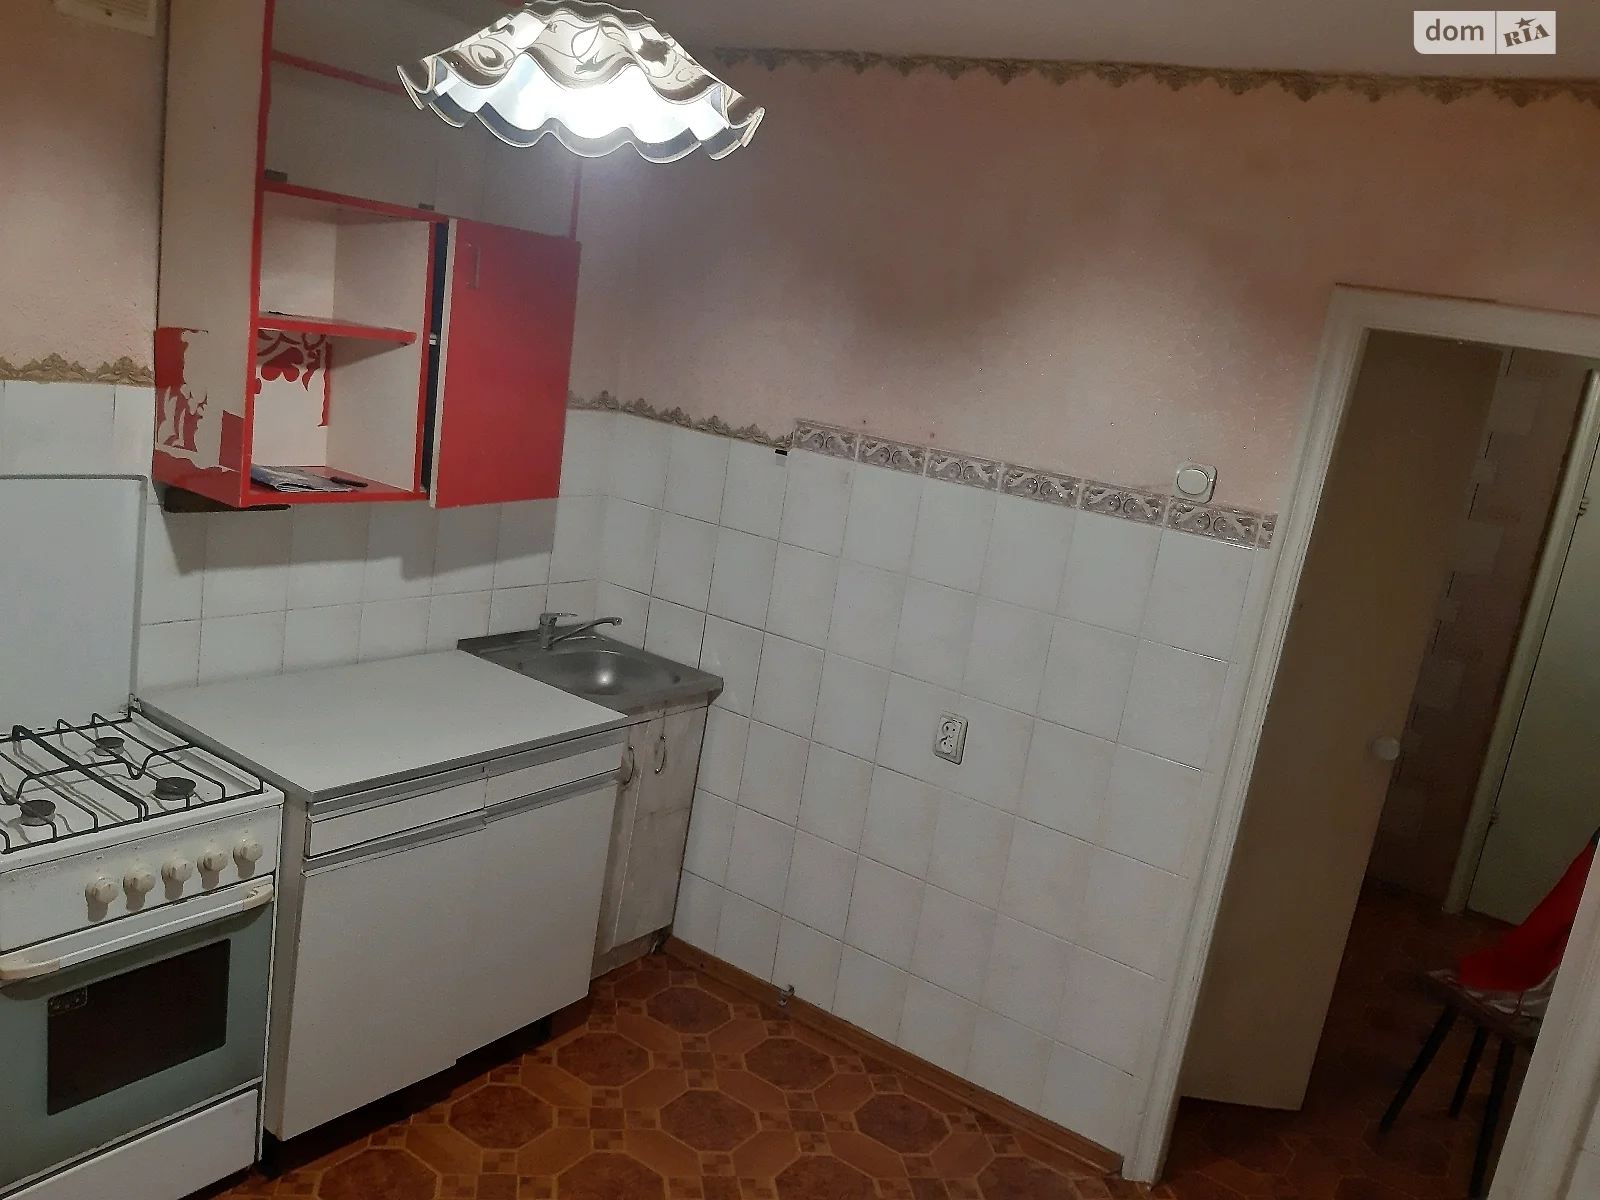 Продается 2-комнатная квартира 51.1 кв. м в Миргороде, цена: 27800 $ - фото 1